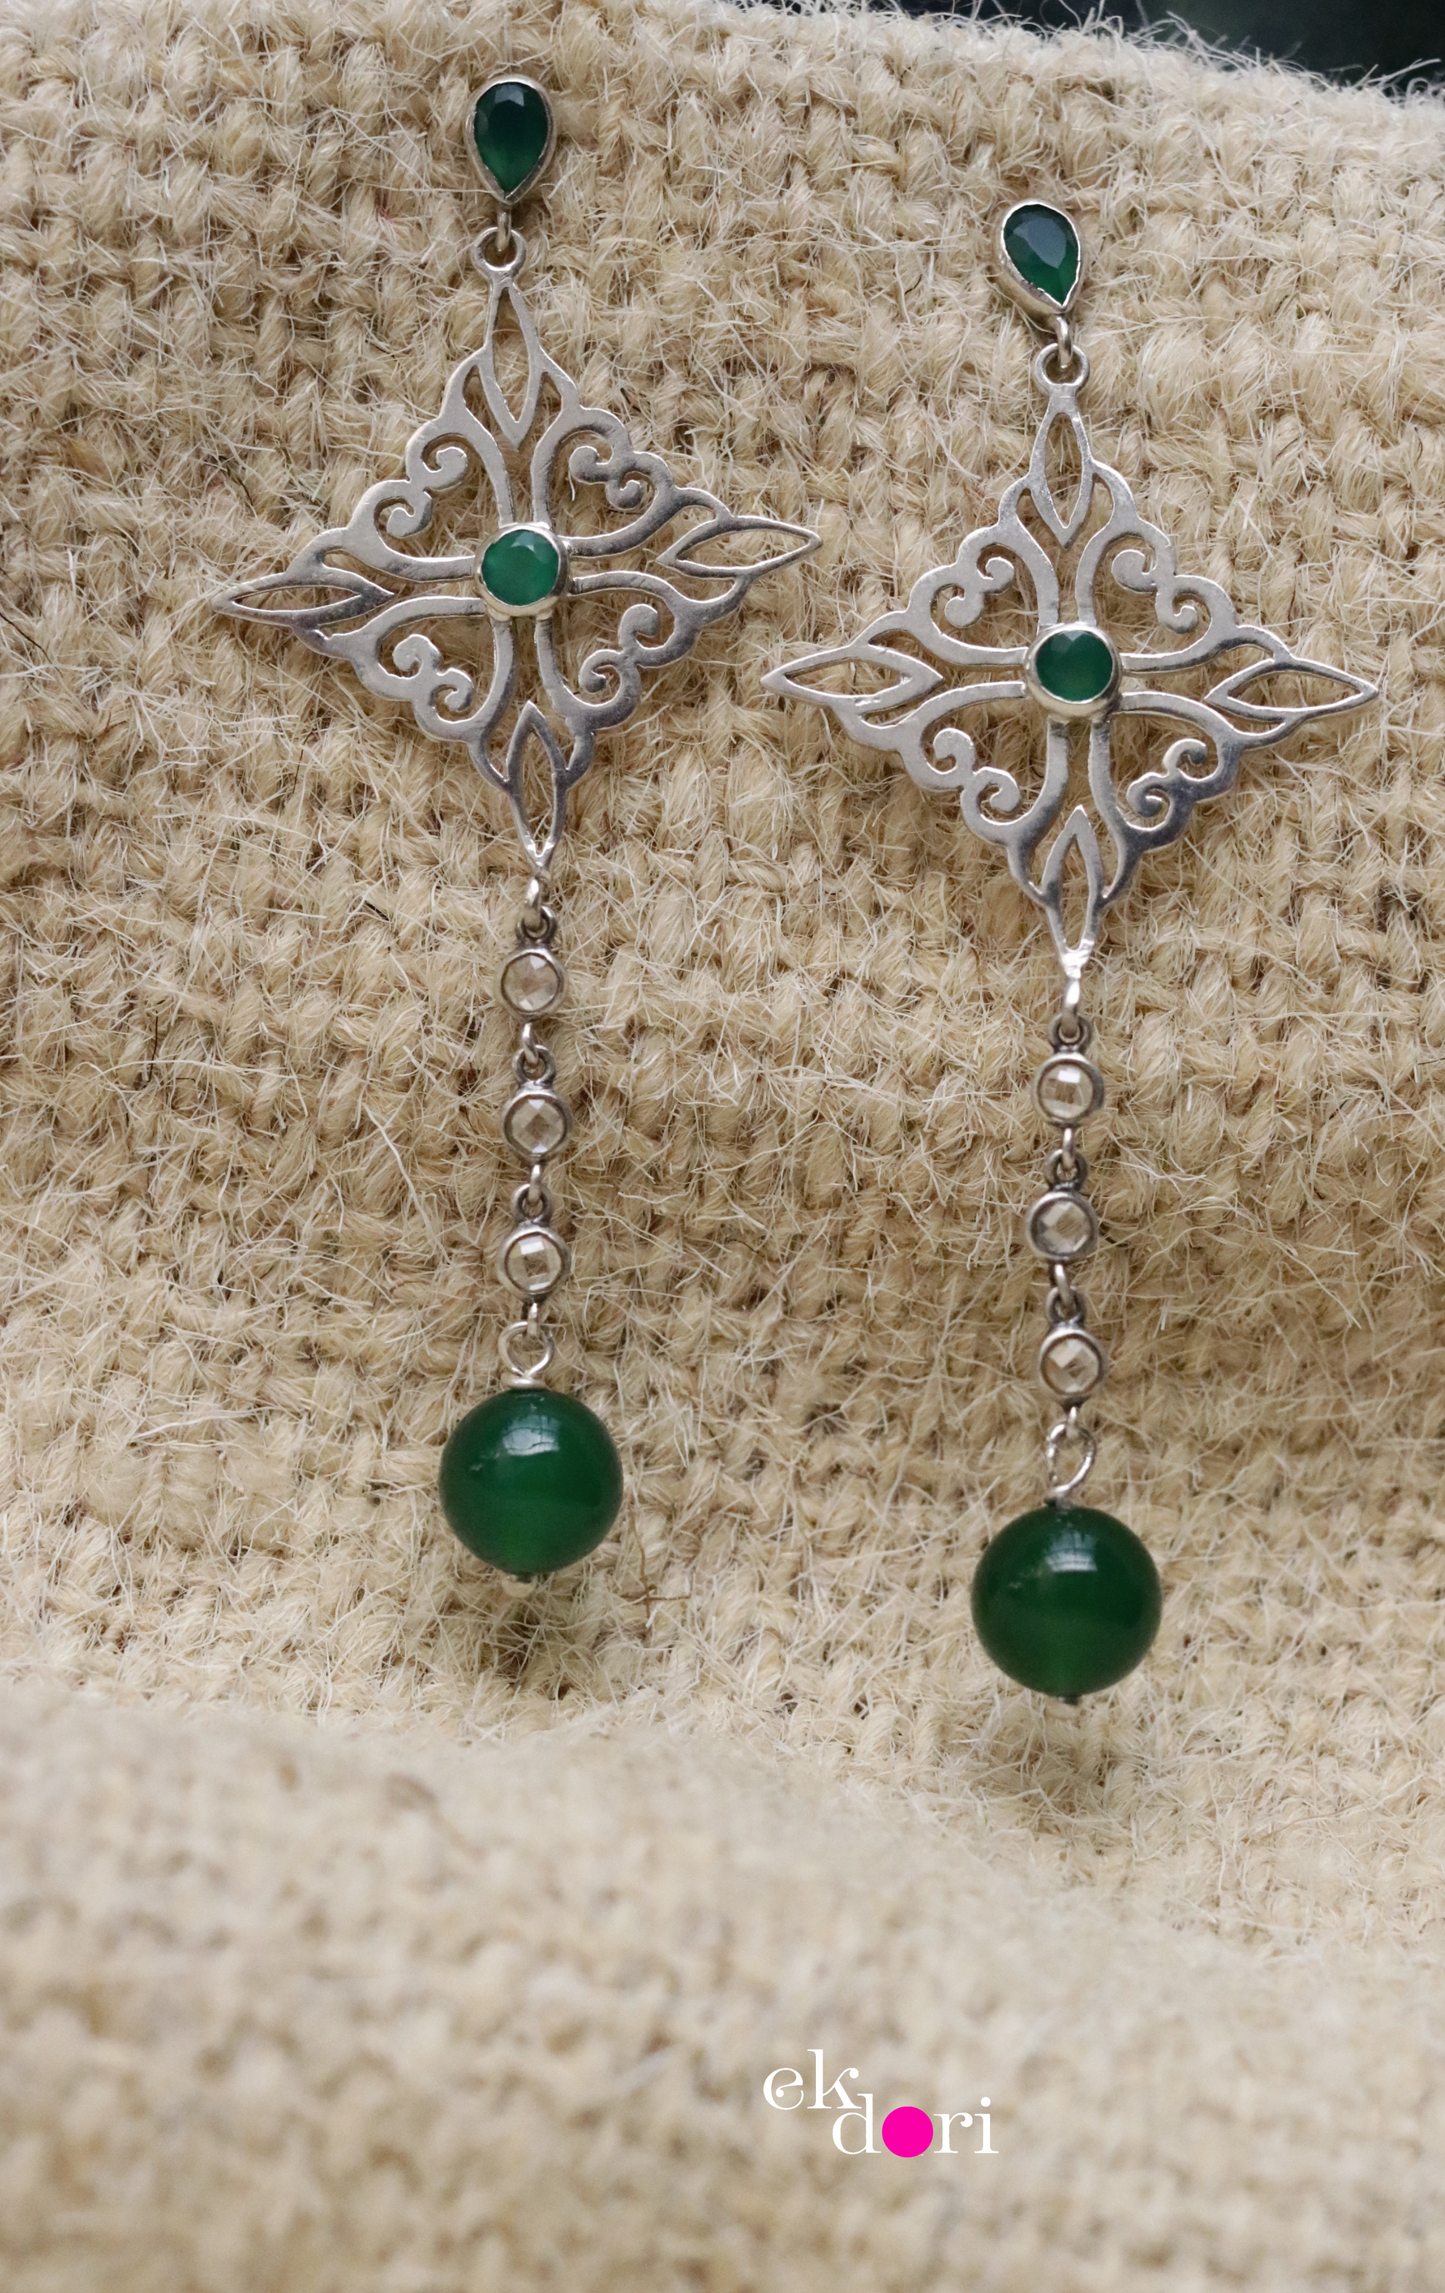 The Jade Silver Statement Earrings : Statement Silver Jewellery